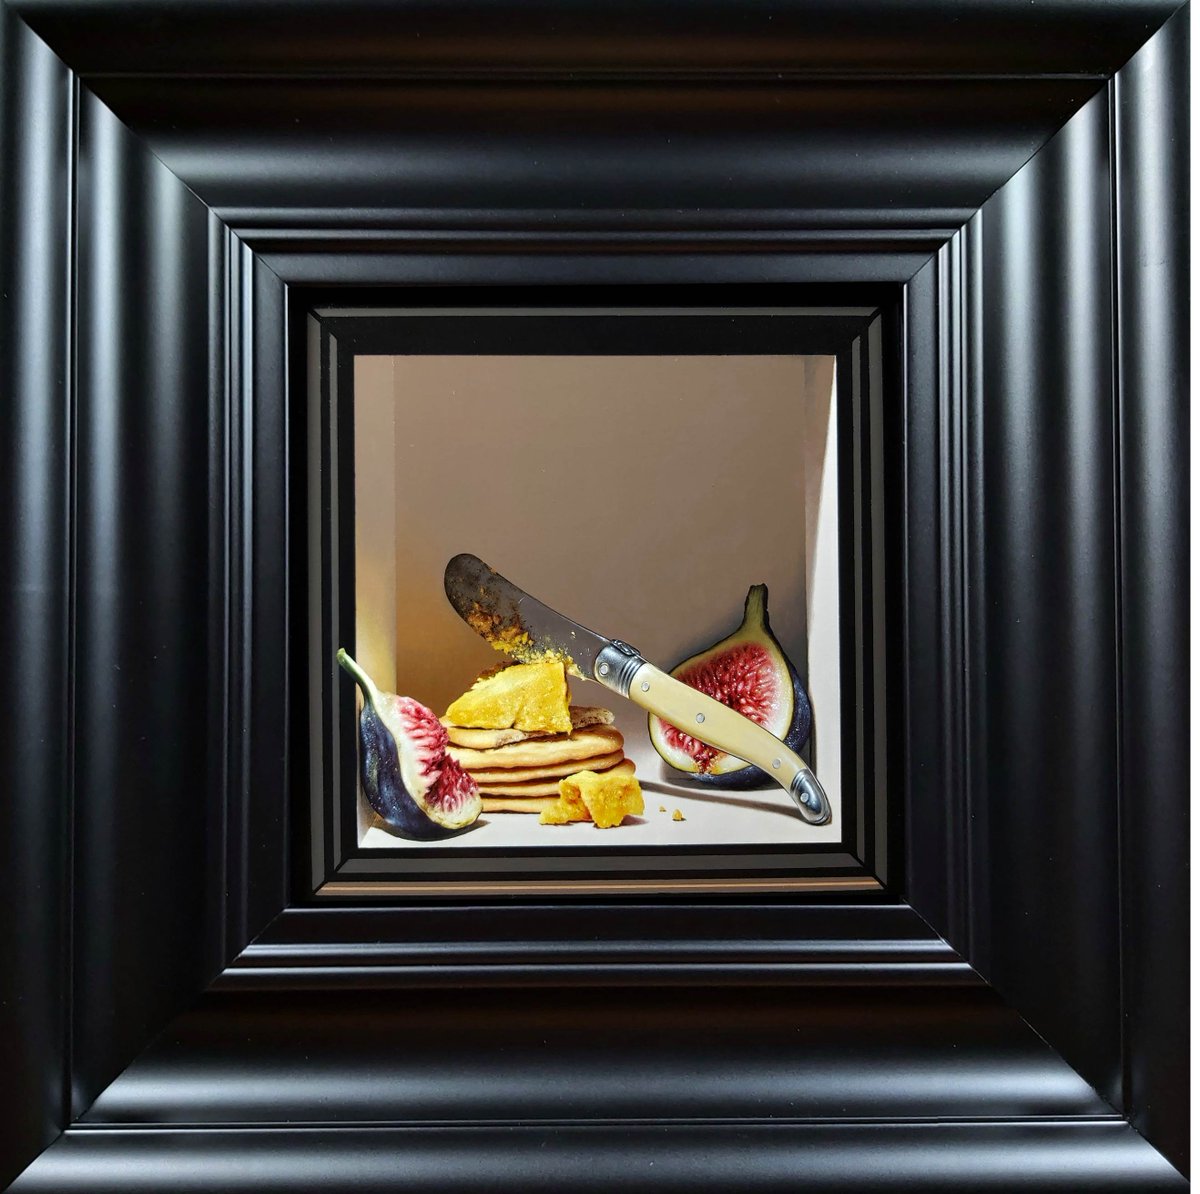 Tempting Figs by Colin Wilson
20x20cm (34x34cm framed)
£1,650.00

DM to enquire or view!

#realism #hyperrealism #beyondrealism #stilllife #figs #cheese #shadowbox #scottishartist #scottishart #edinburgh #artgalleryedinburgh #buyart #interiordesign